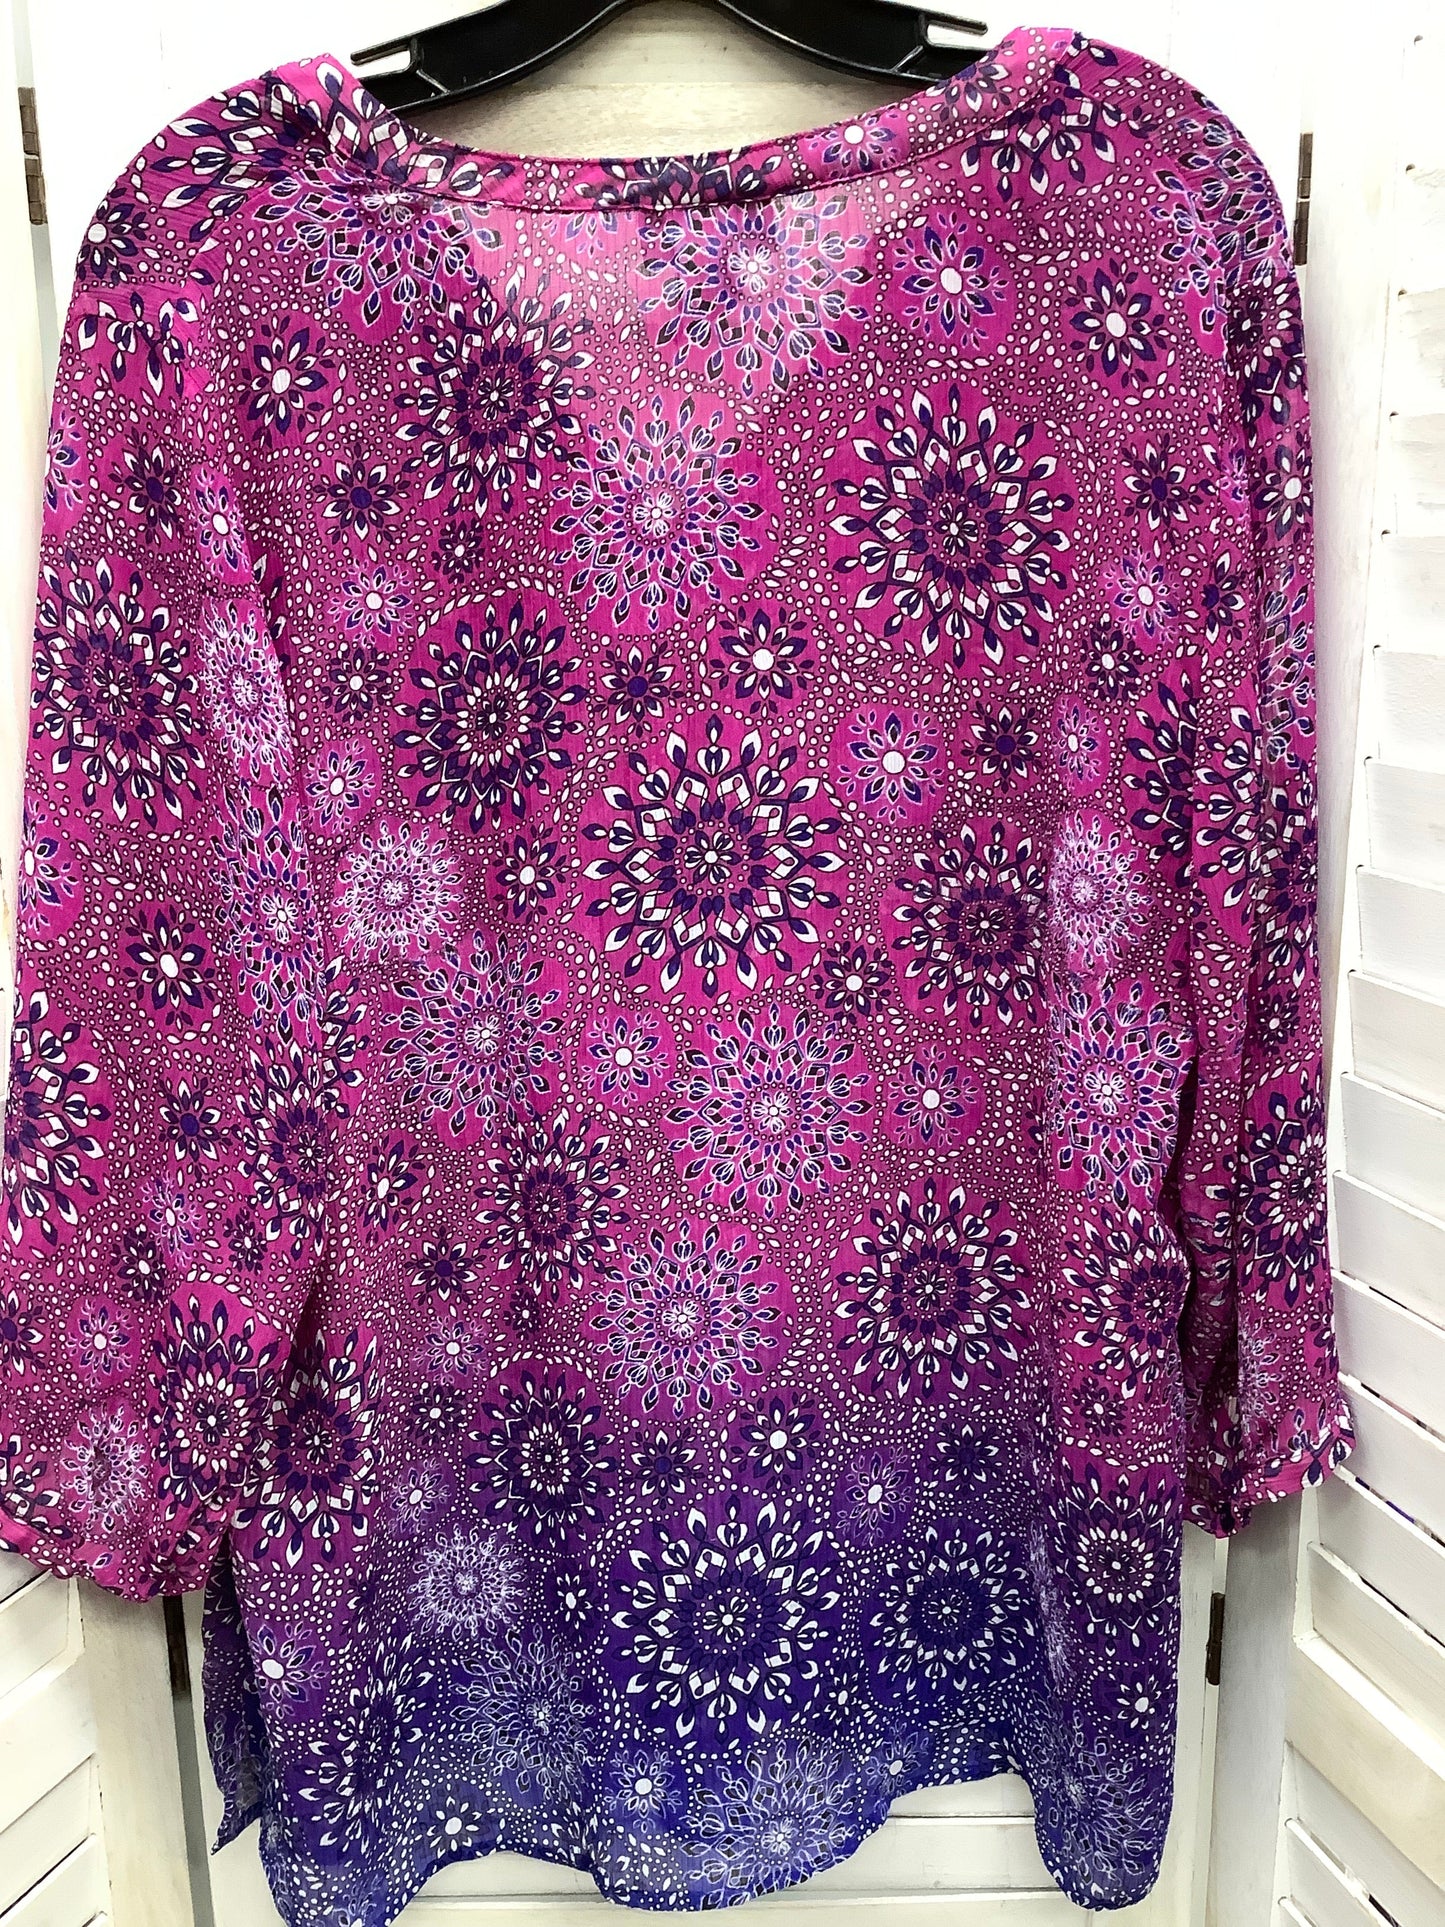 Purple Top 3/4 Sleeve Catherines, Size 14